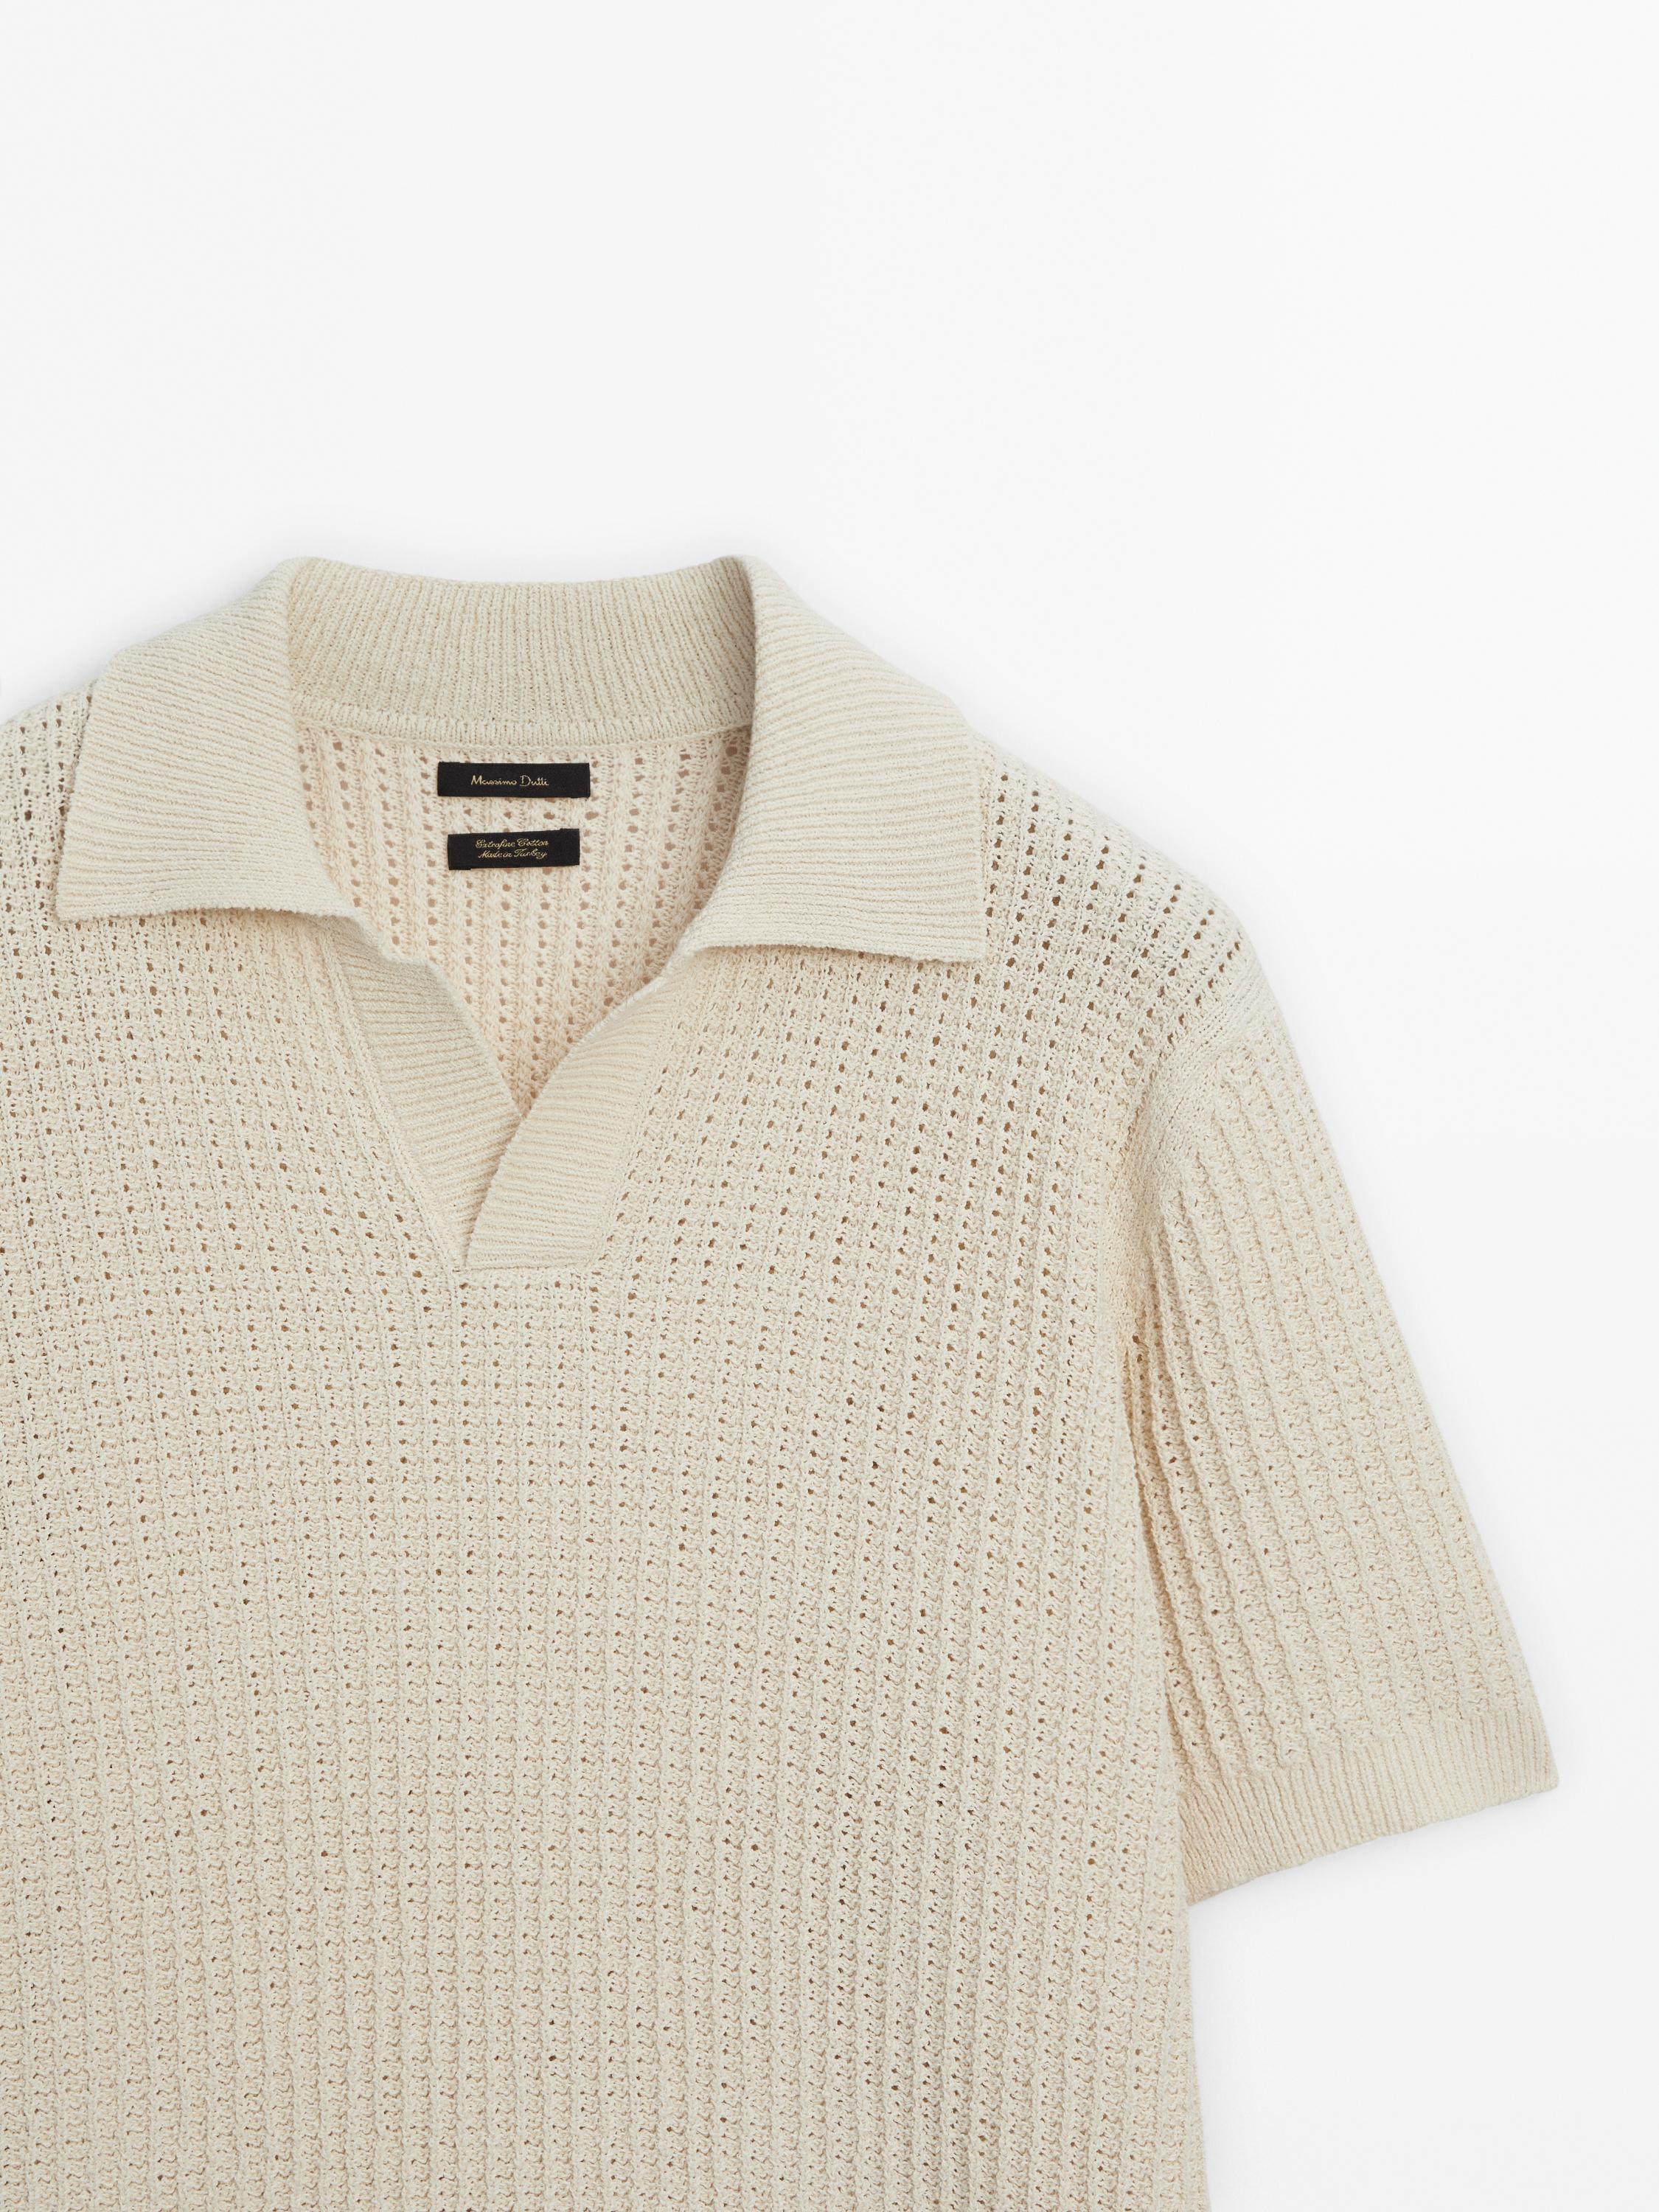 Short sleeve textured knit polo shirt